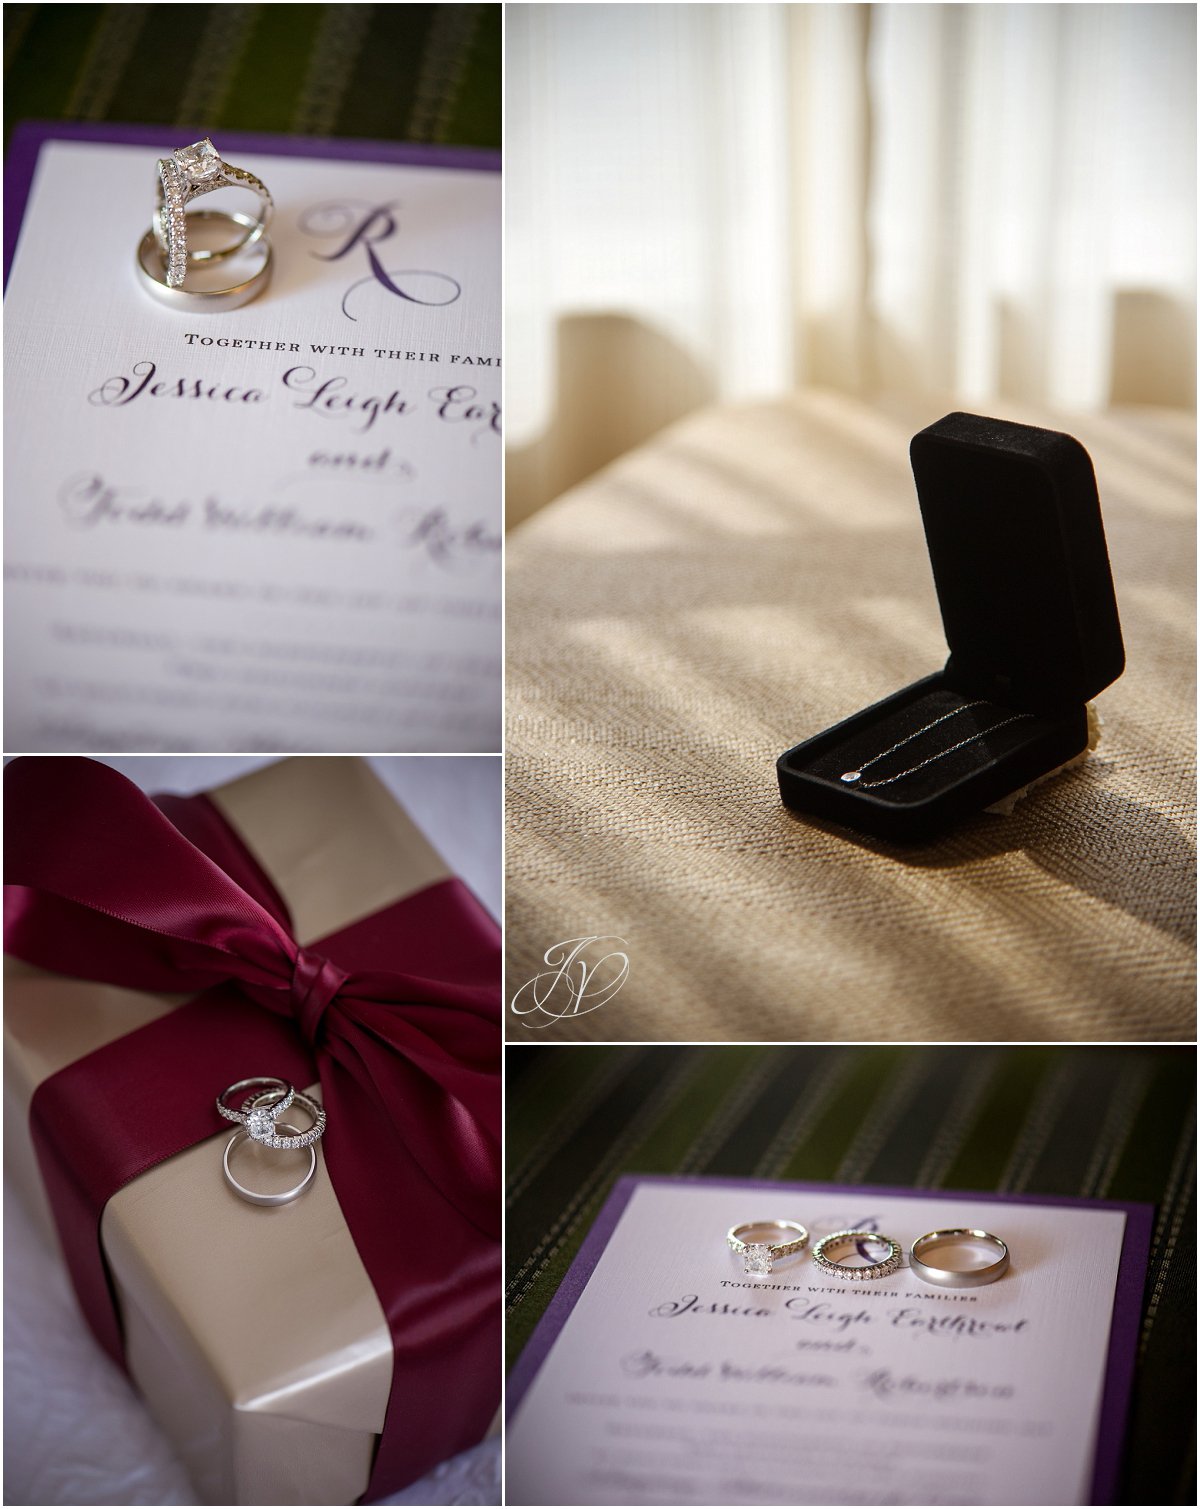 wedding ring details wedding invitation